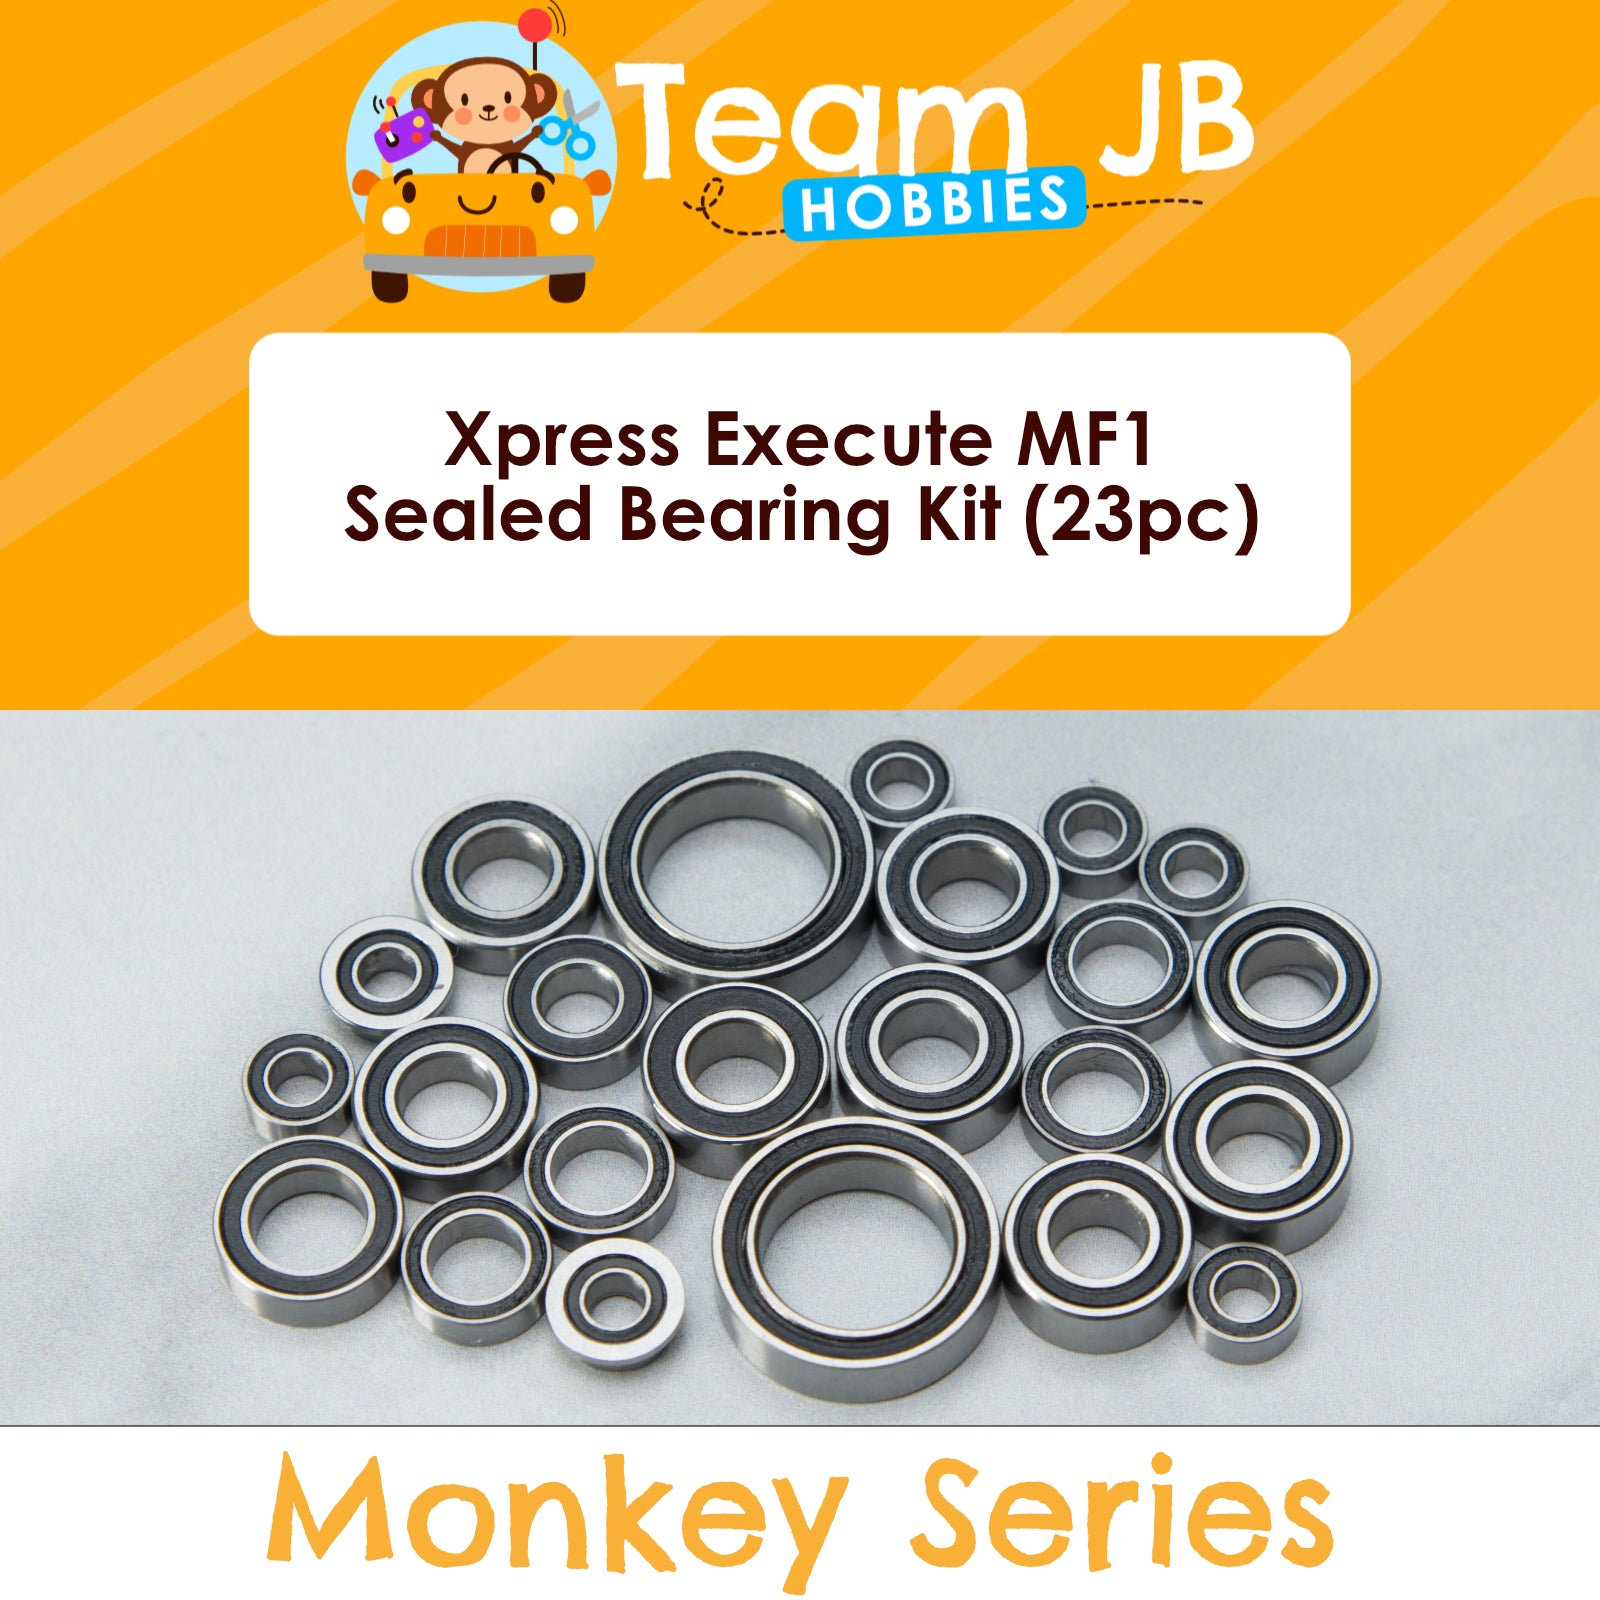 Xpress Execute MF1 - Sealed Bearing Kit